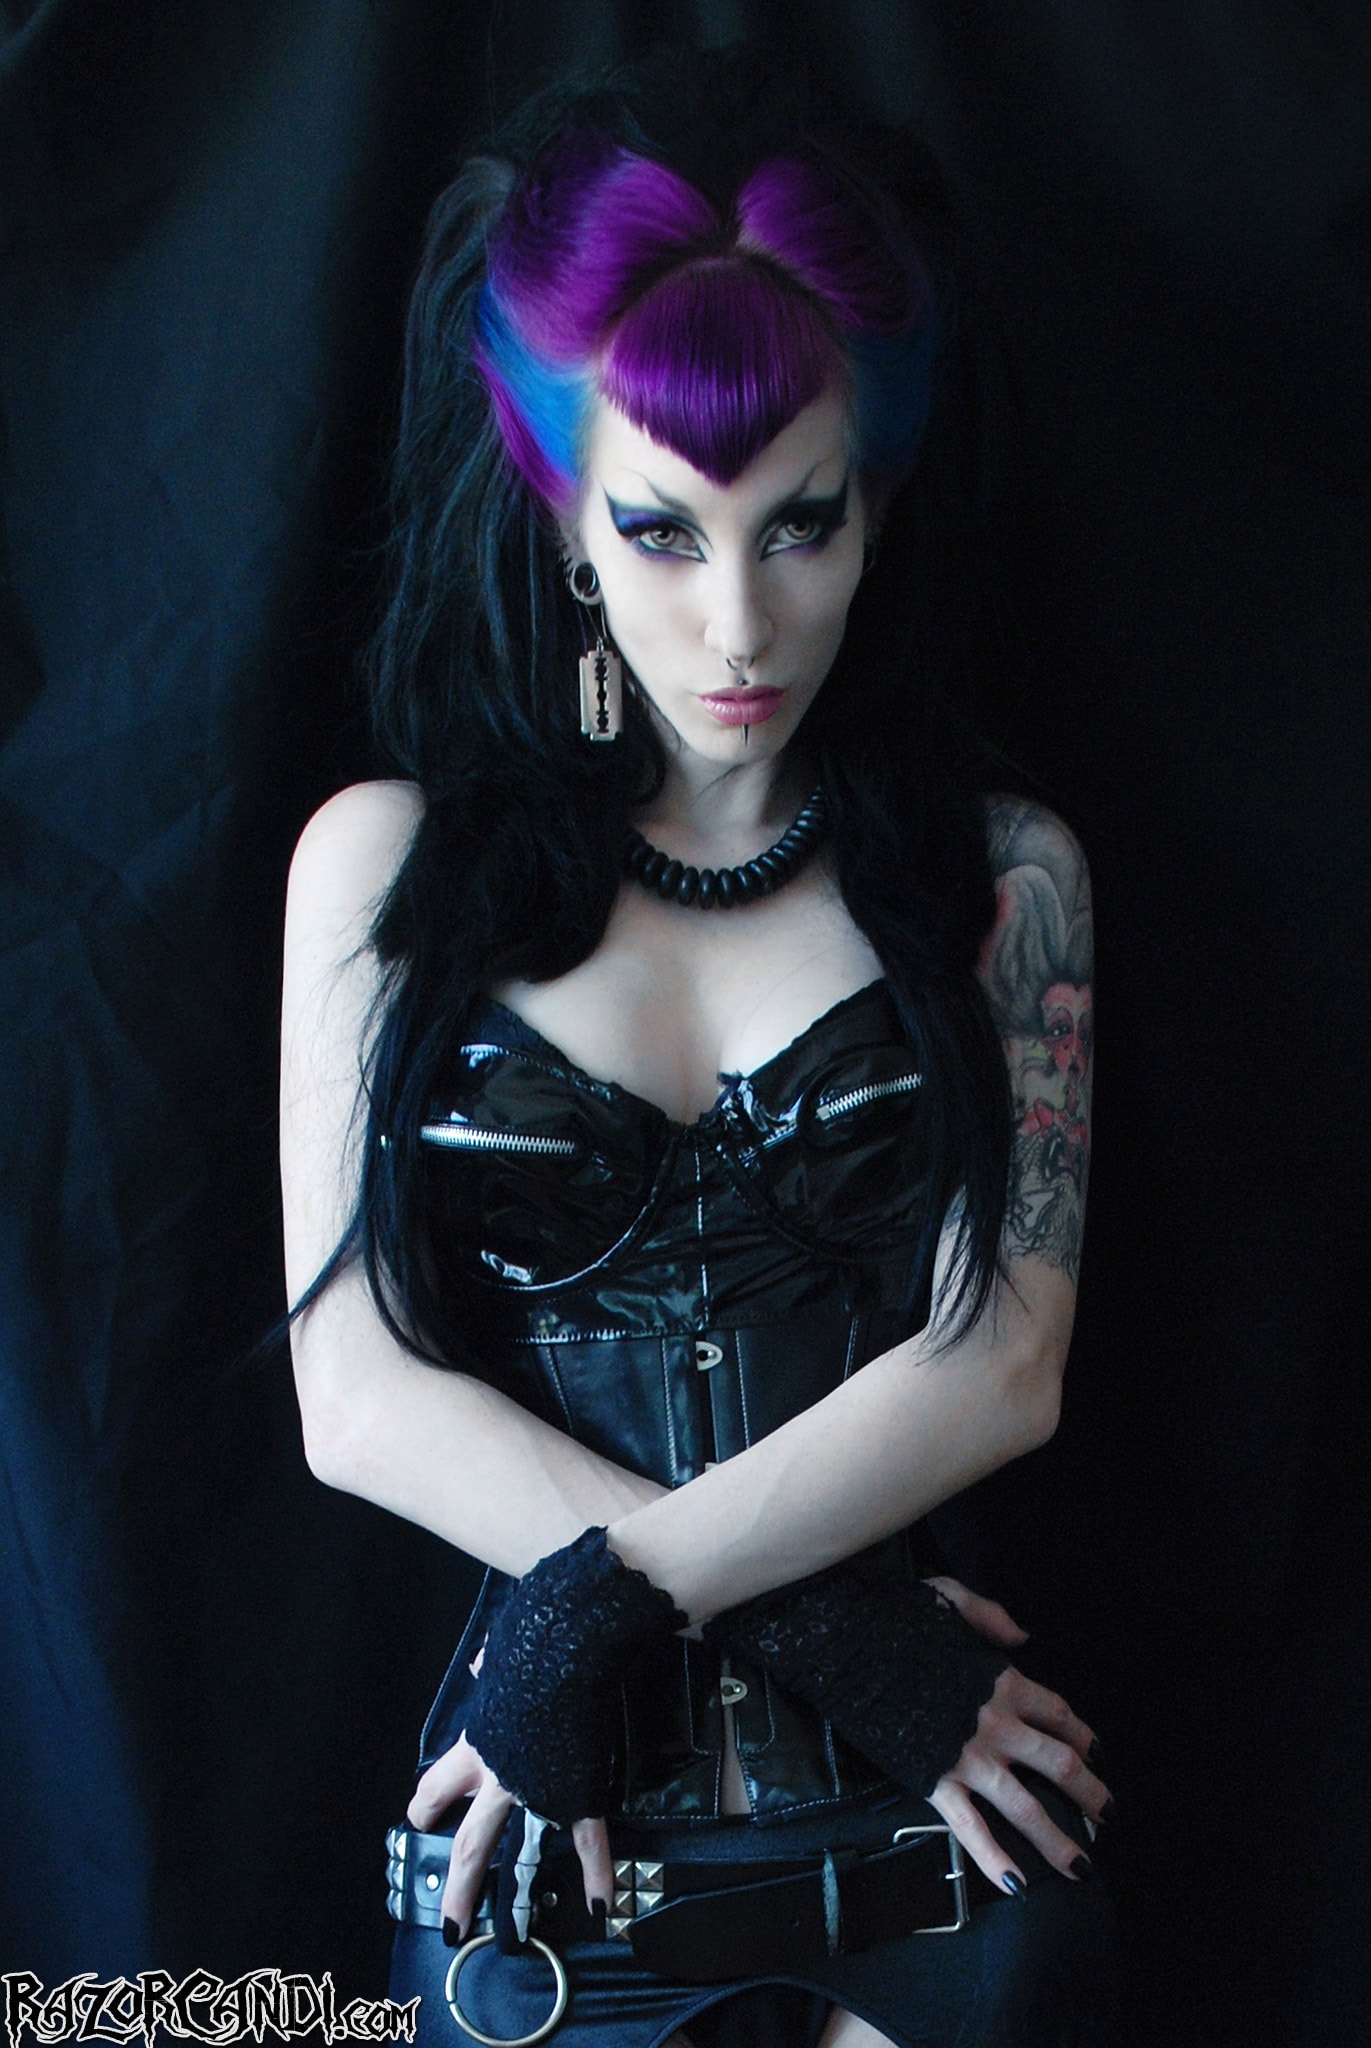 Razor Candi 'Gothic Dreamgirl Razor Candi in Black Leather' starring Razor Candi (Photo 2)